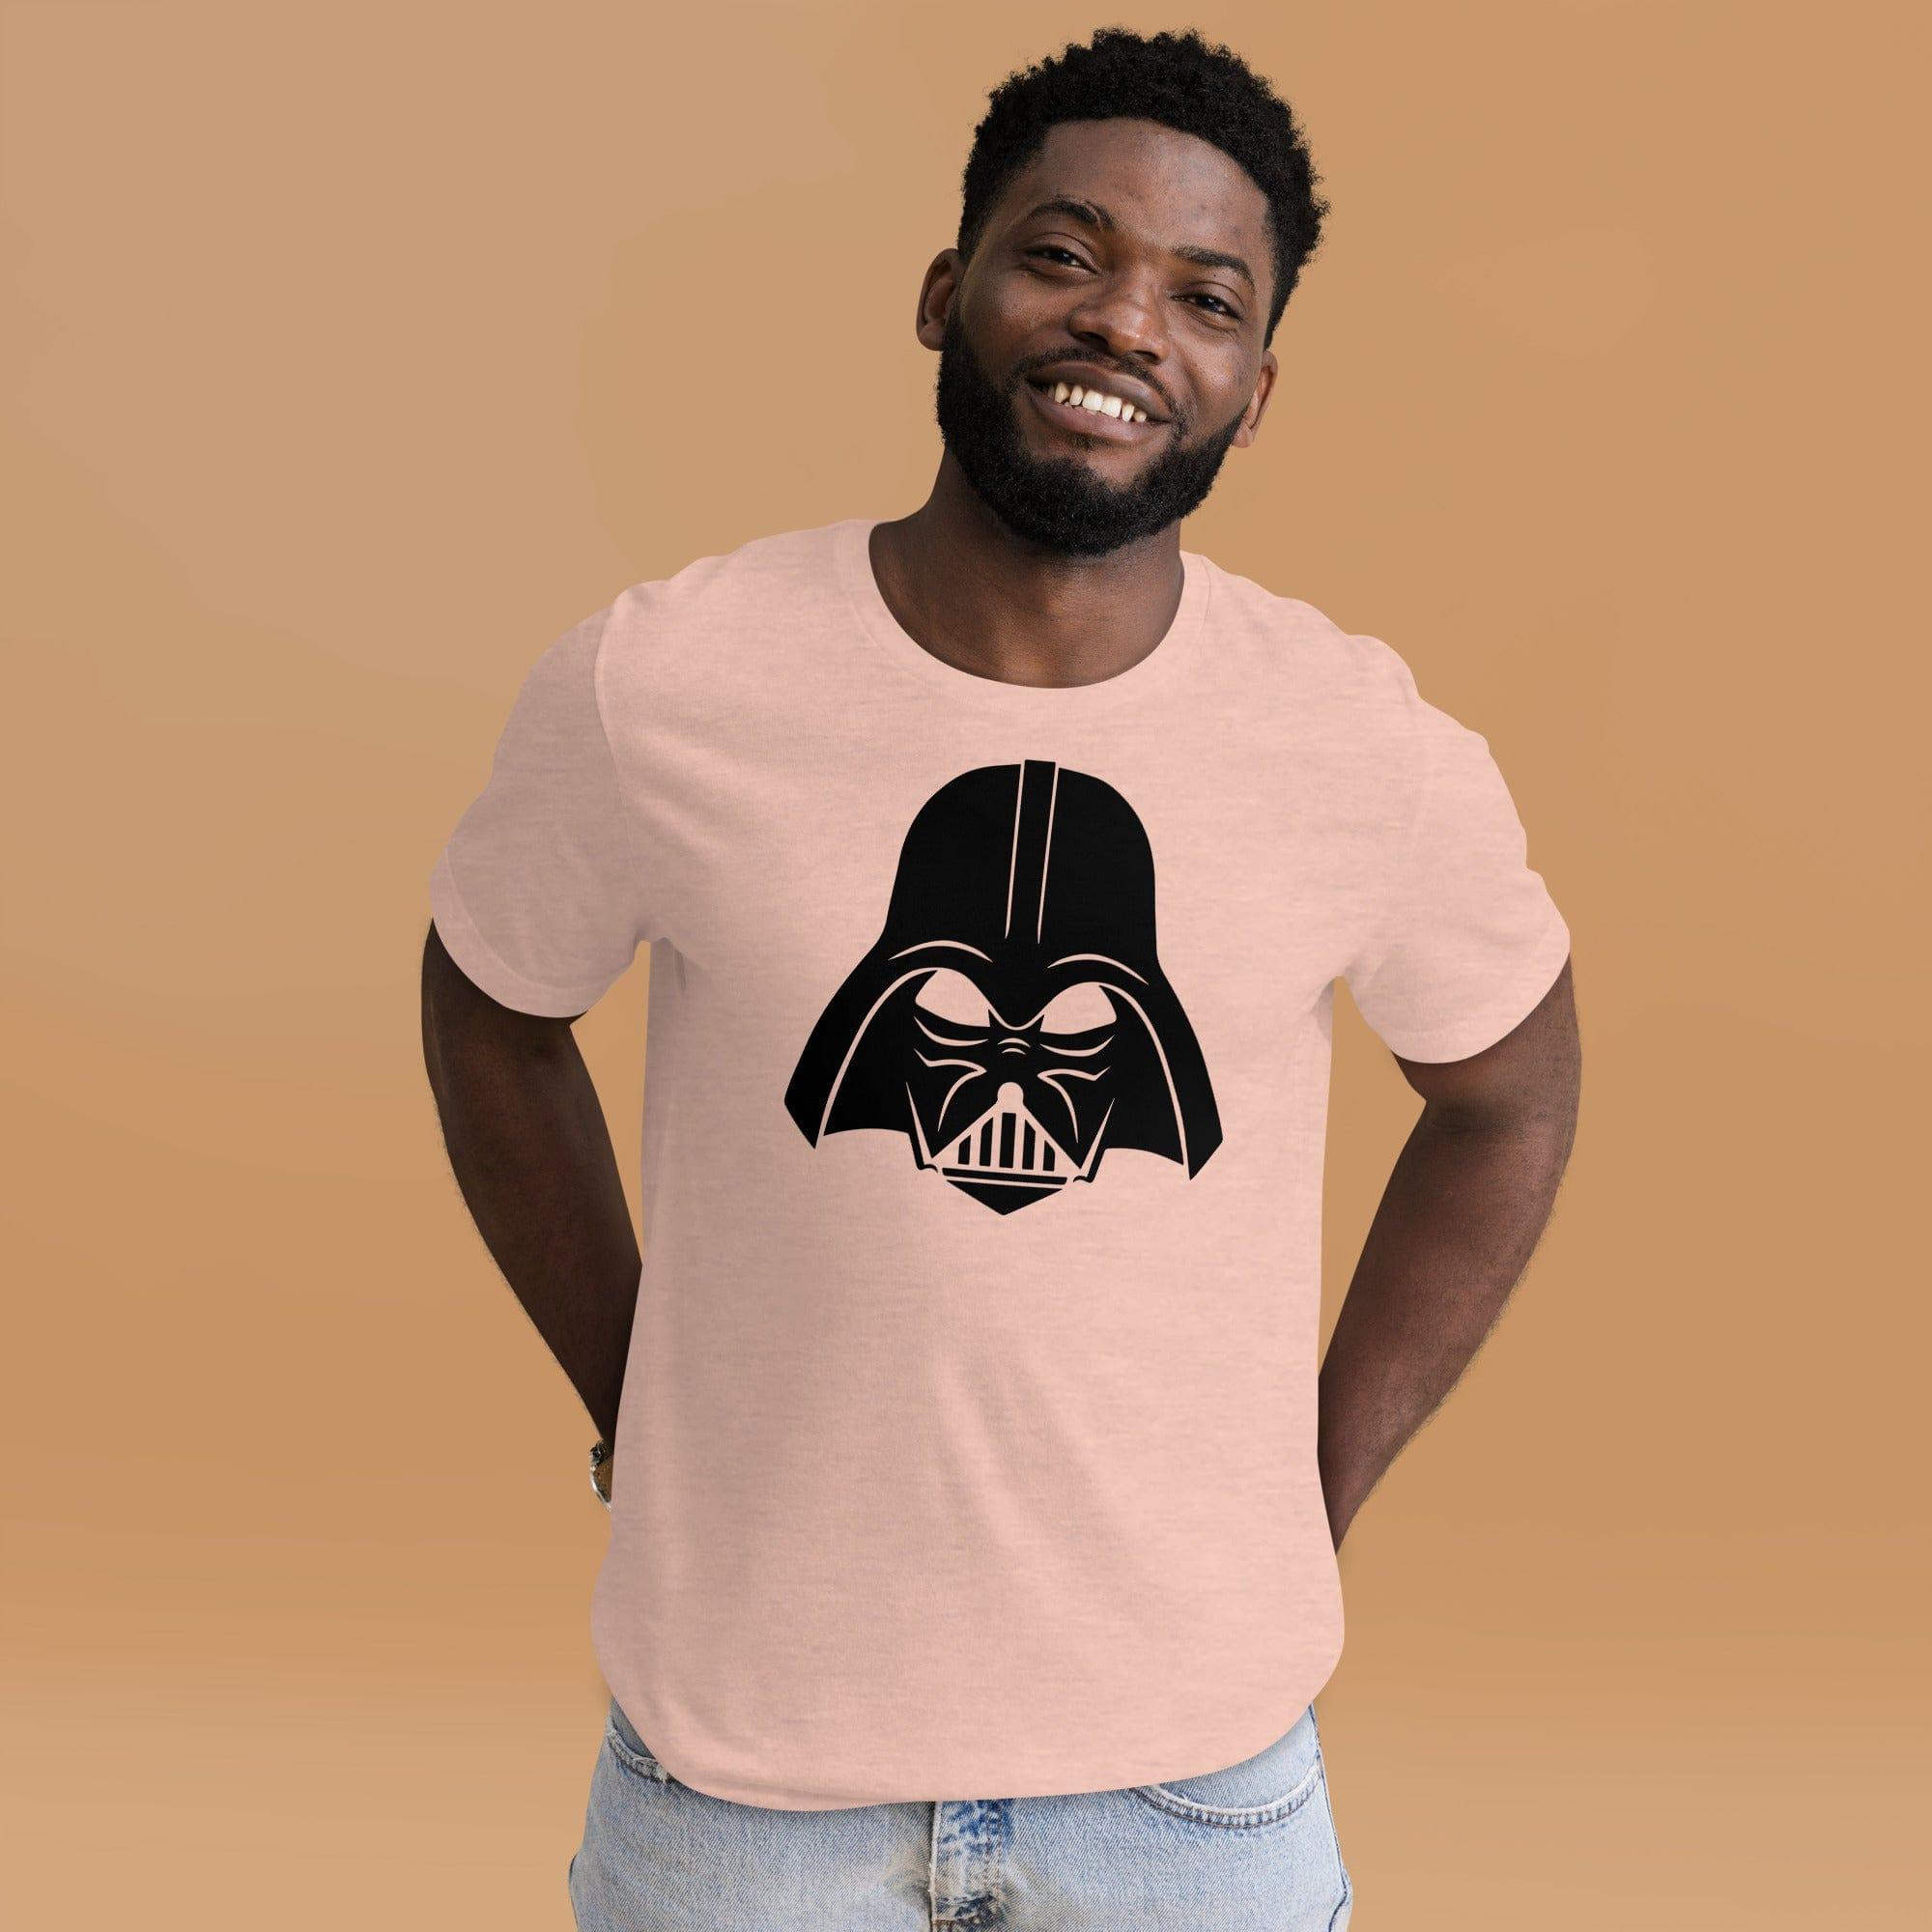 Star Wars T-shirt Lord Darth Vader 80's Film Character Short Sleeve Top - TopKoalaTee